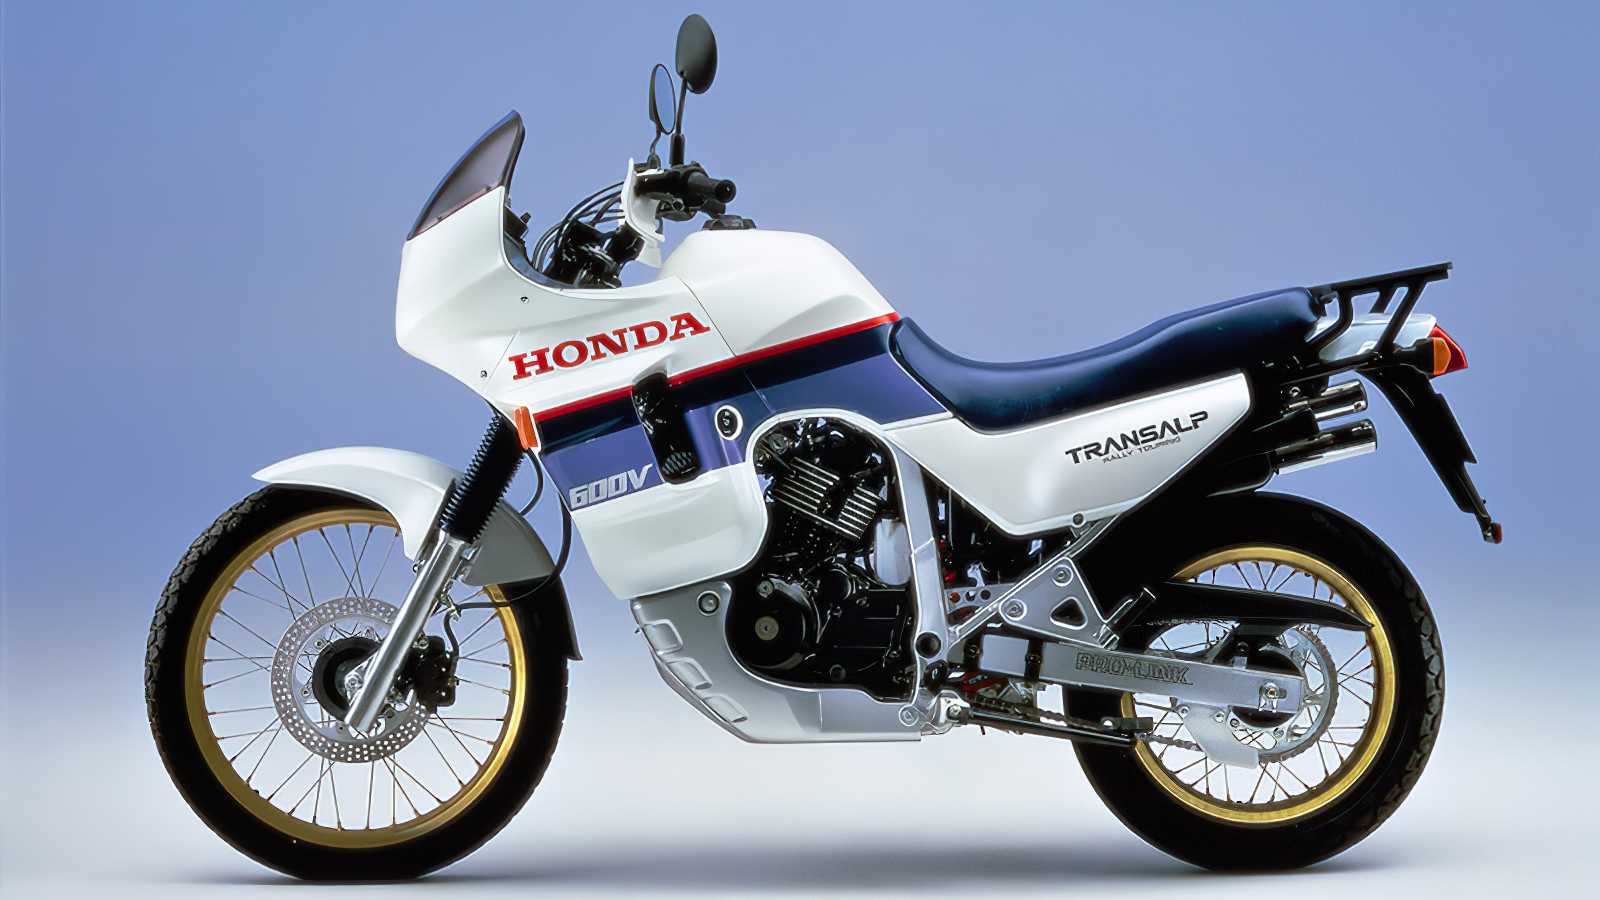 New Honda Transalp - Presentation at the EICMA?
- MOTORCYCLES.NEWS